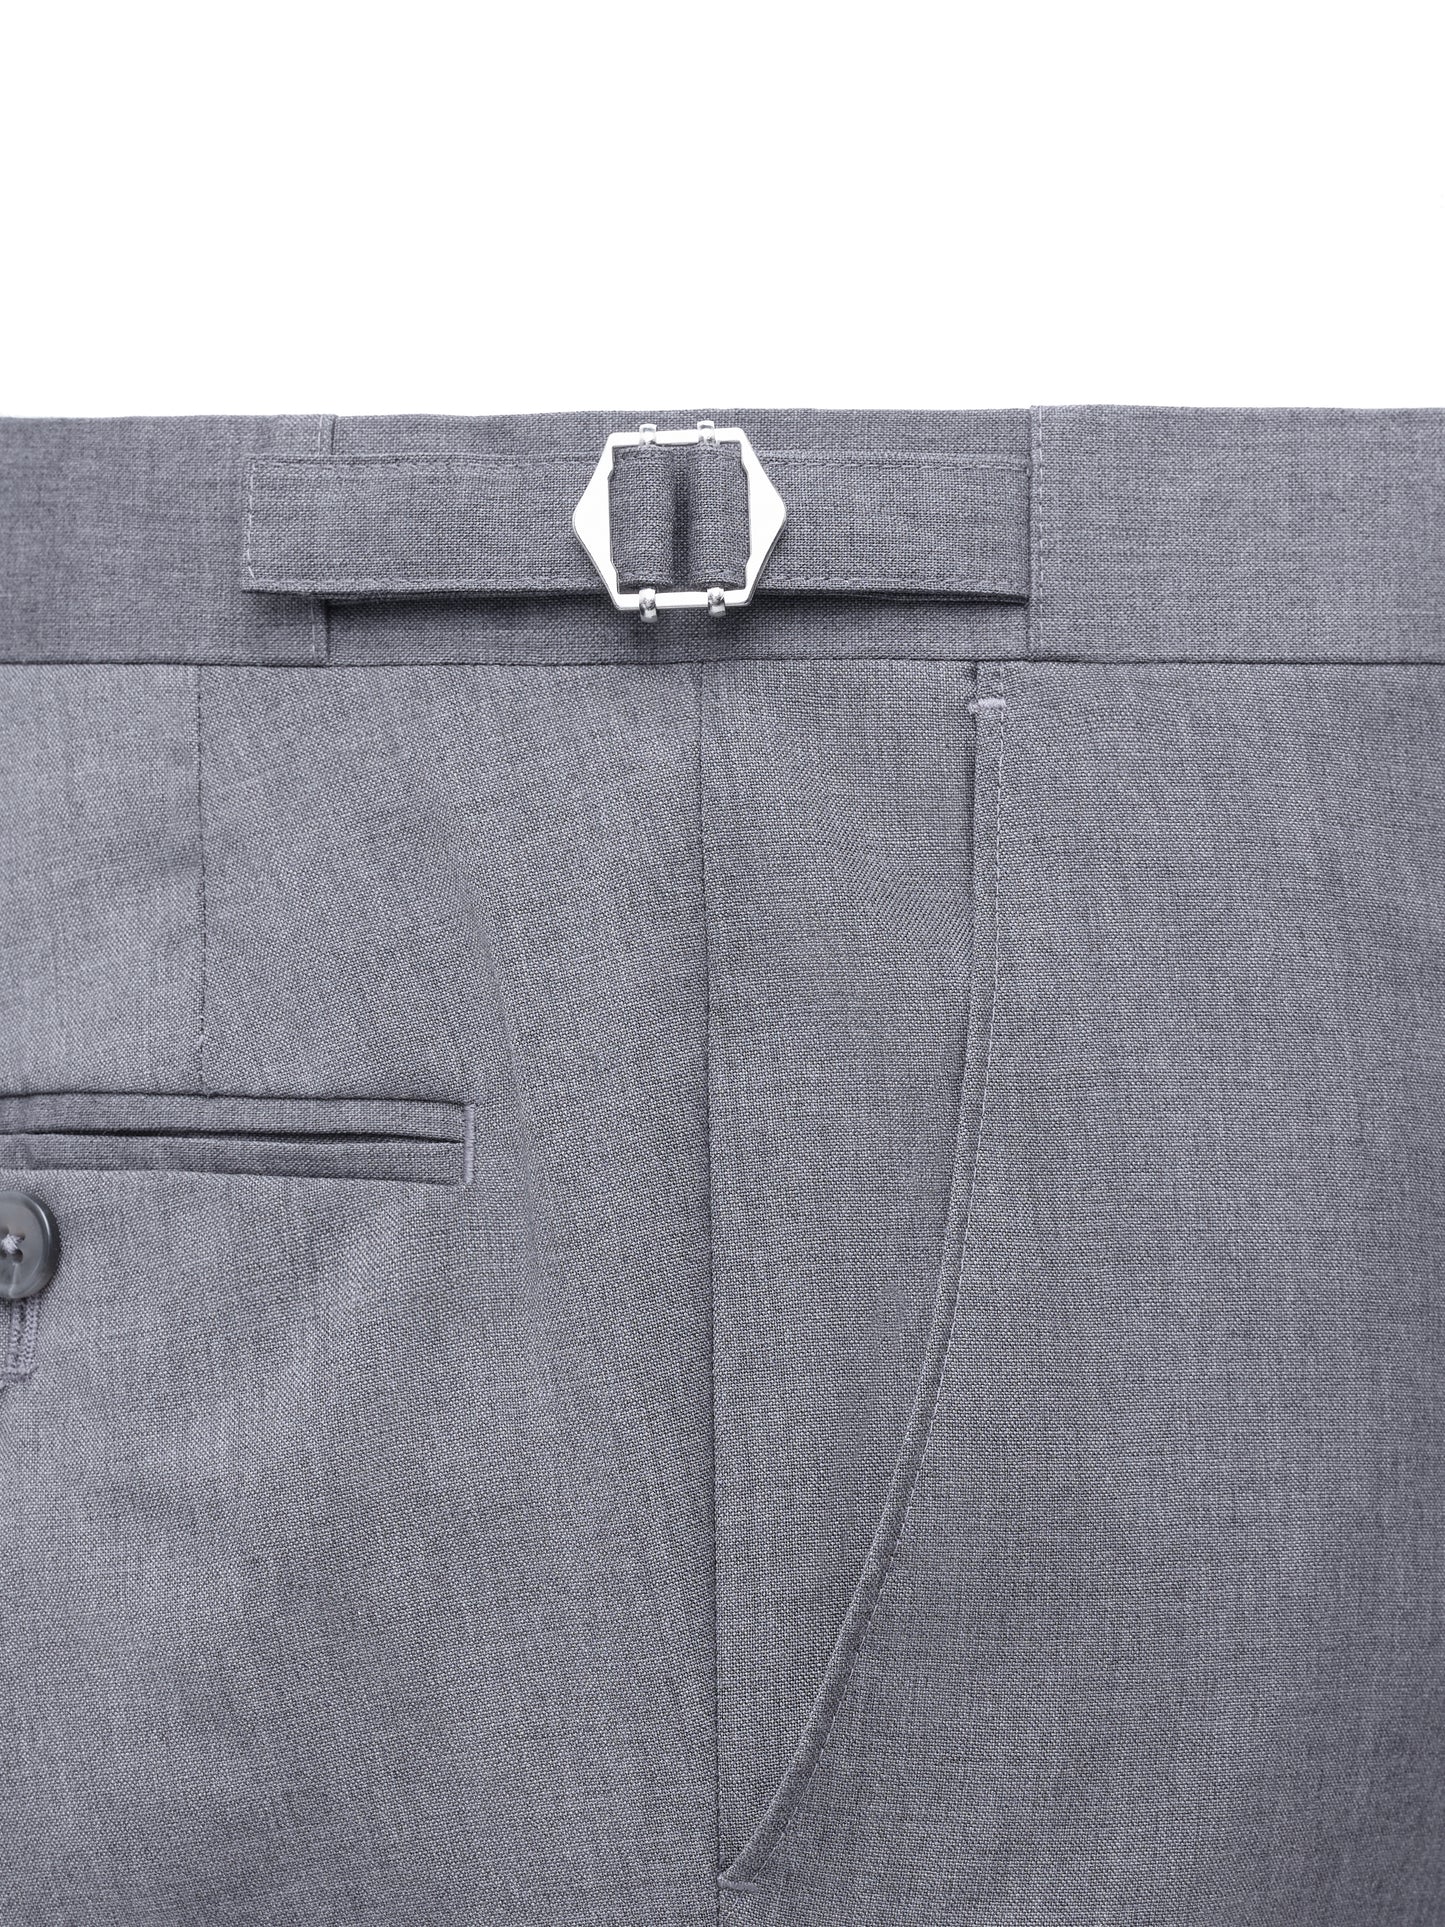 Limited Edition Eaton Suit - Plain Grey Lightweight